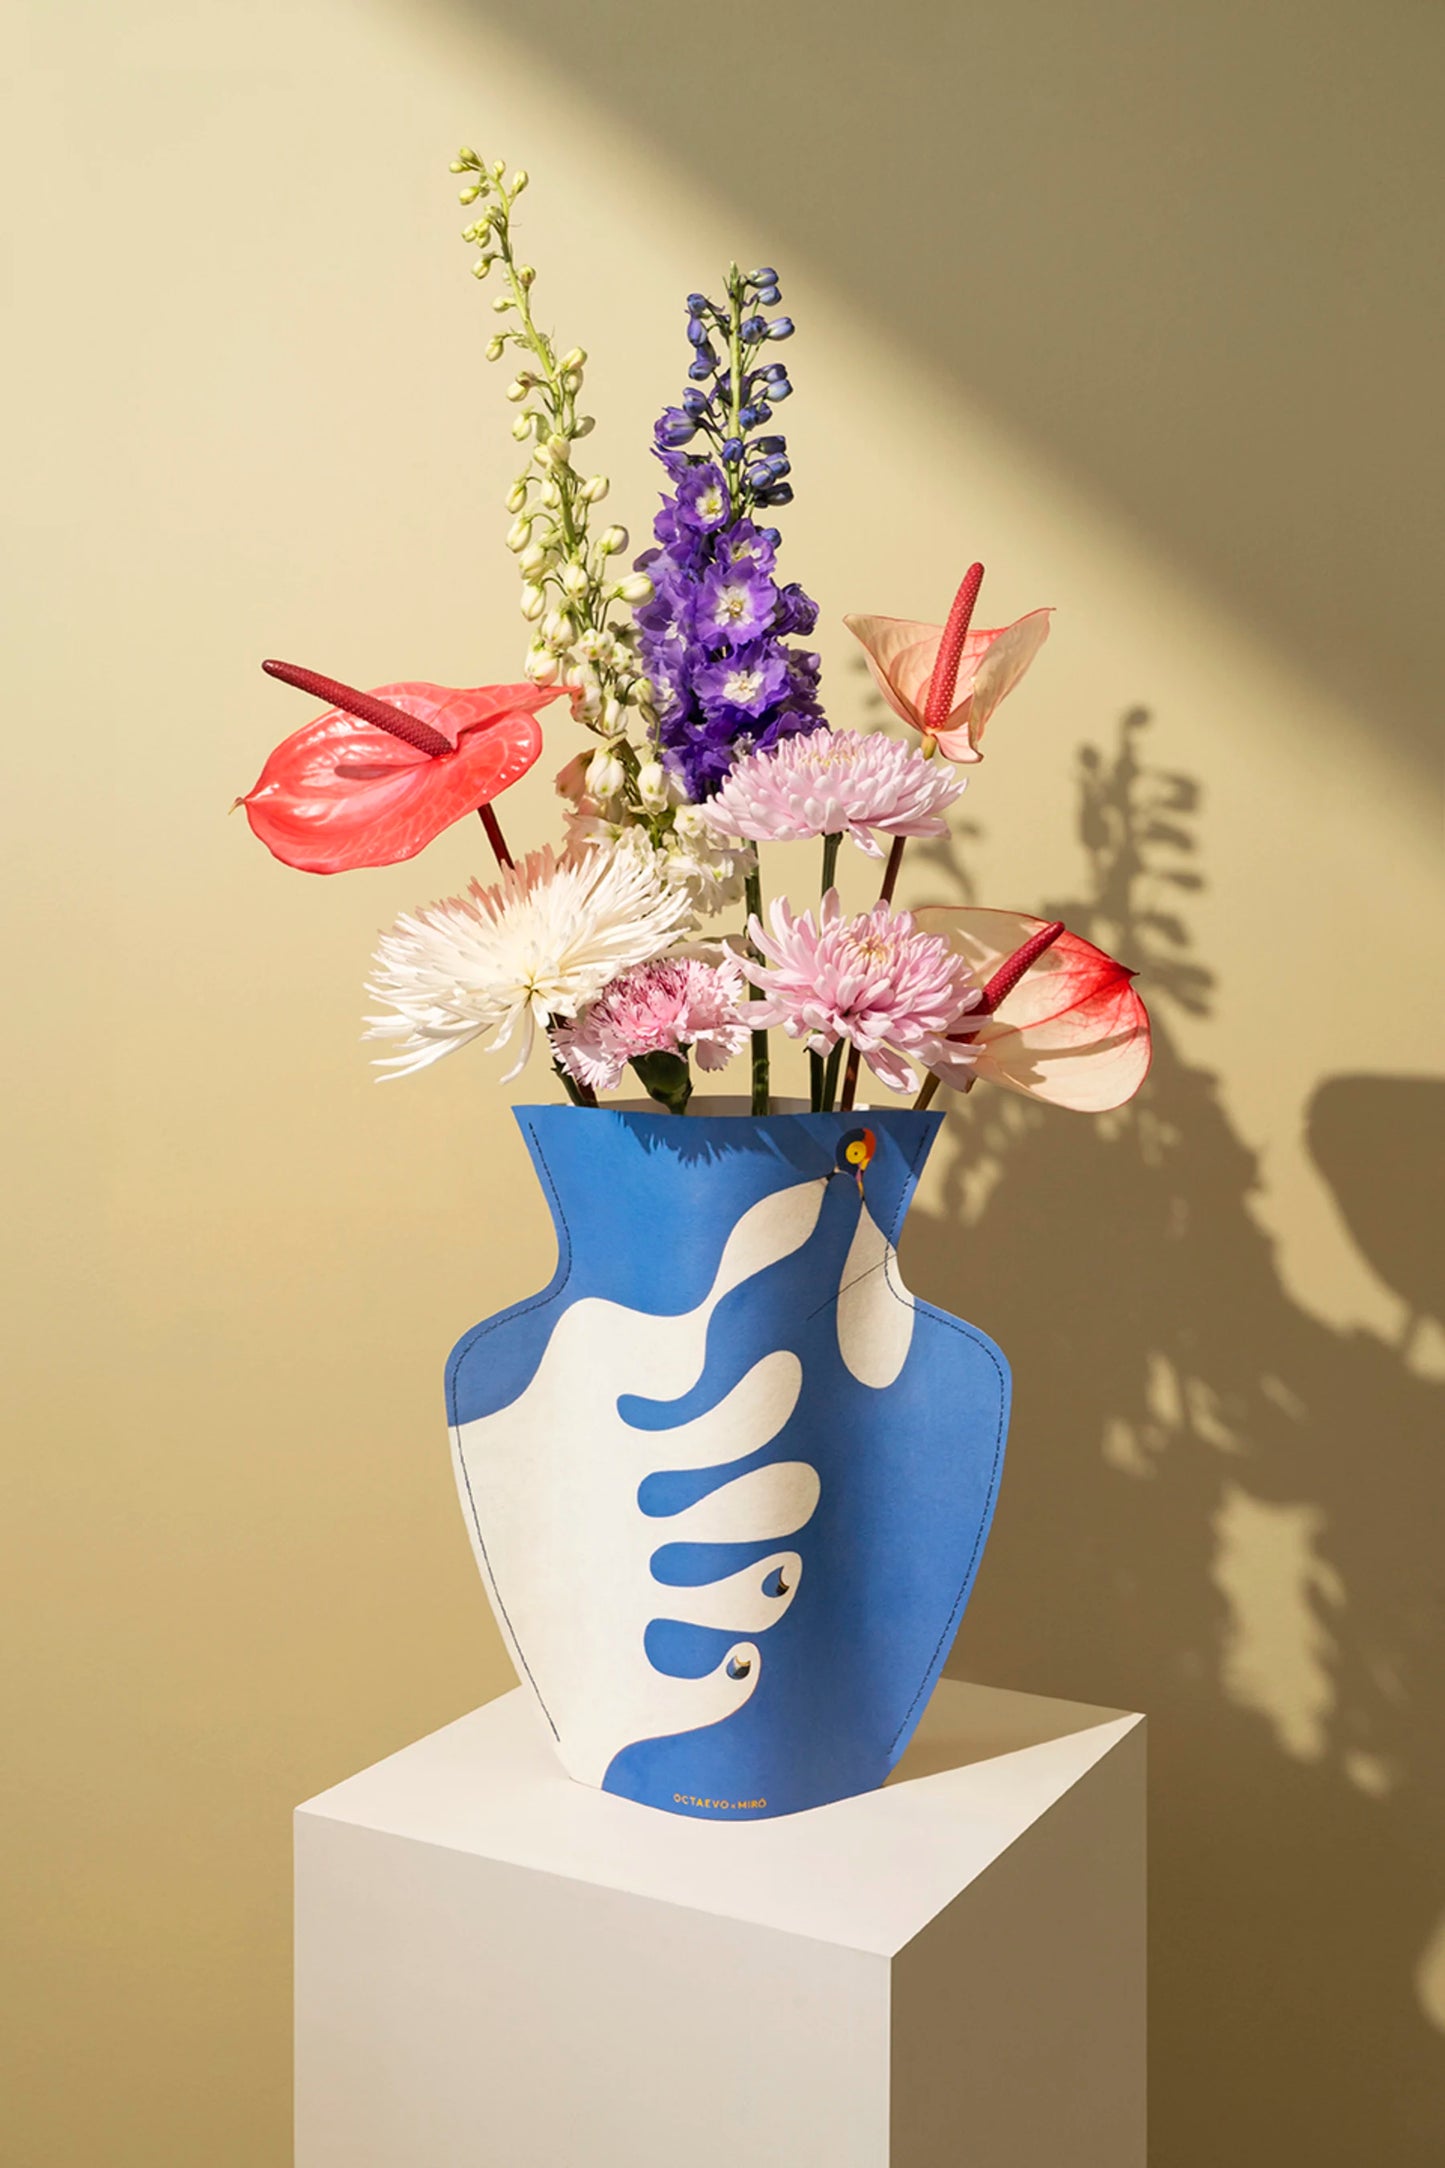 OCTAEVO – Papírová váza Main La Poursuite Dun Oiseau (Joan Miró Foundation)